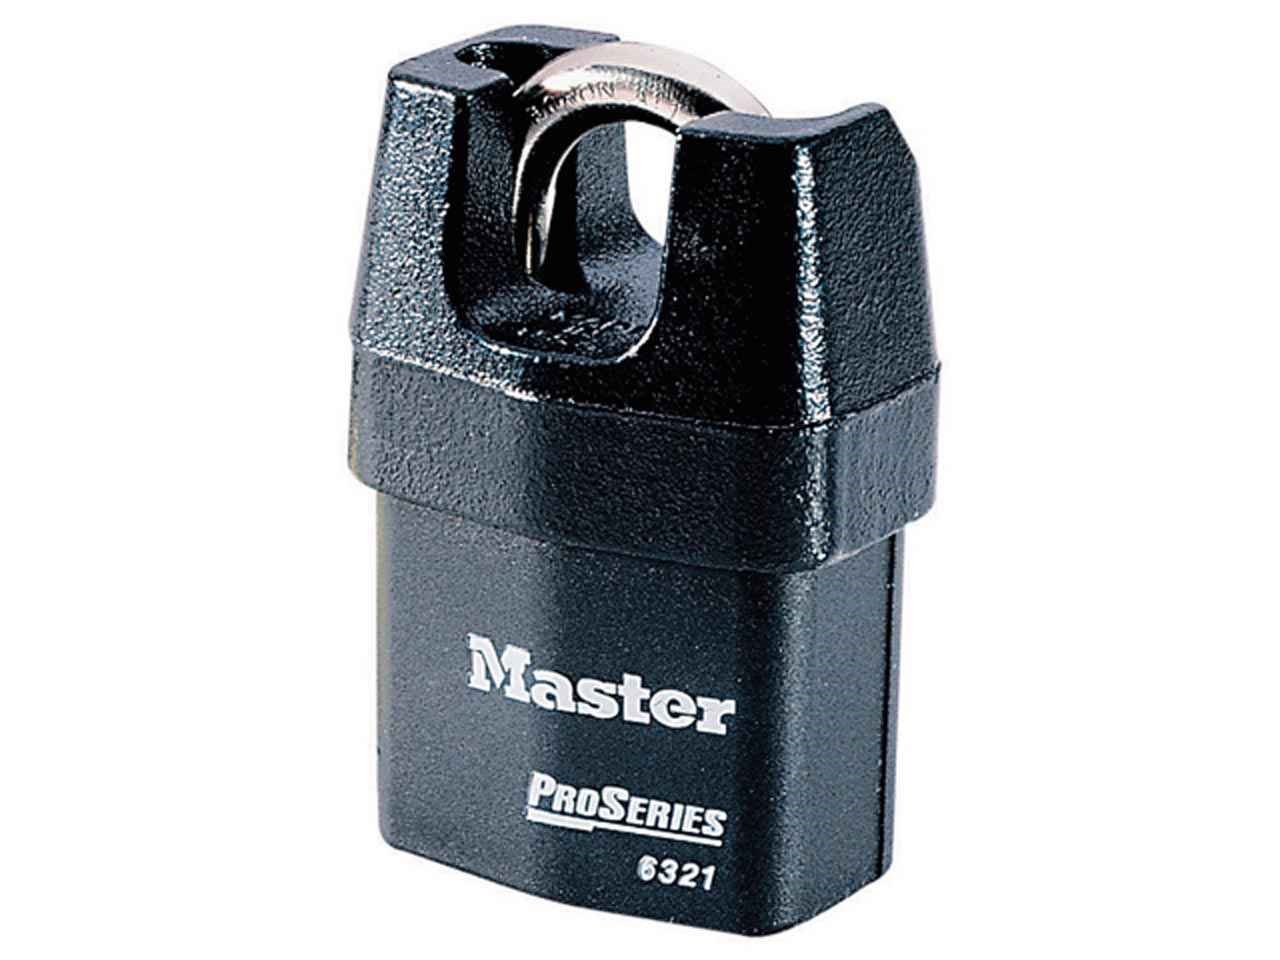 Masterlock 6321KA-10G016 Pro Series Padlock 54mm - Shrouded Shackle ...